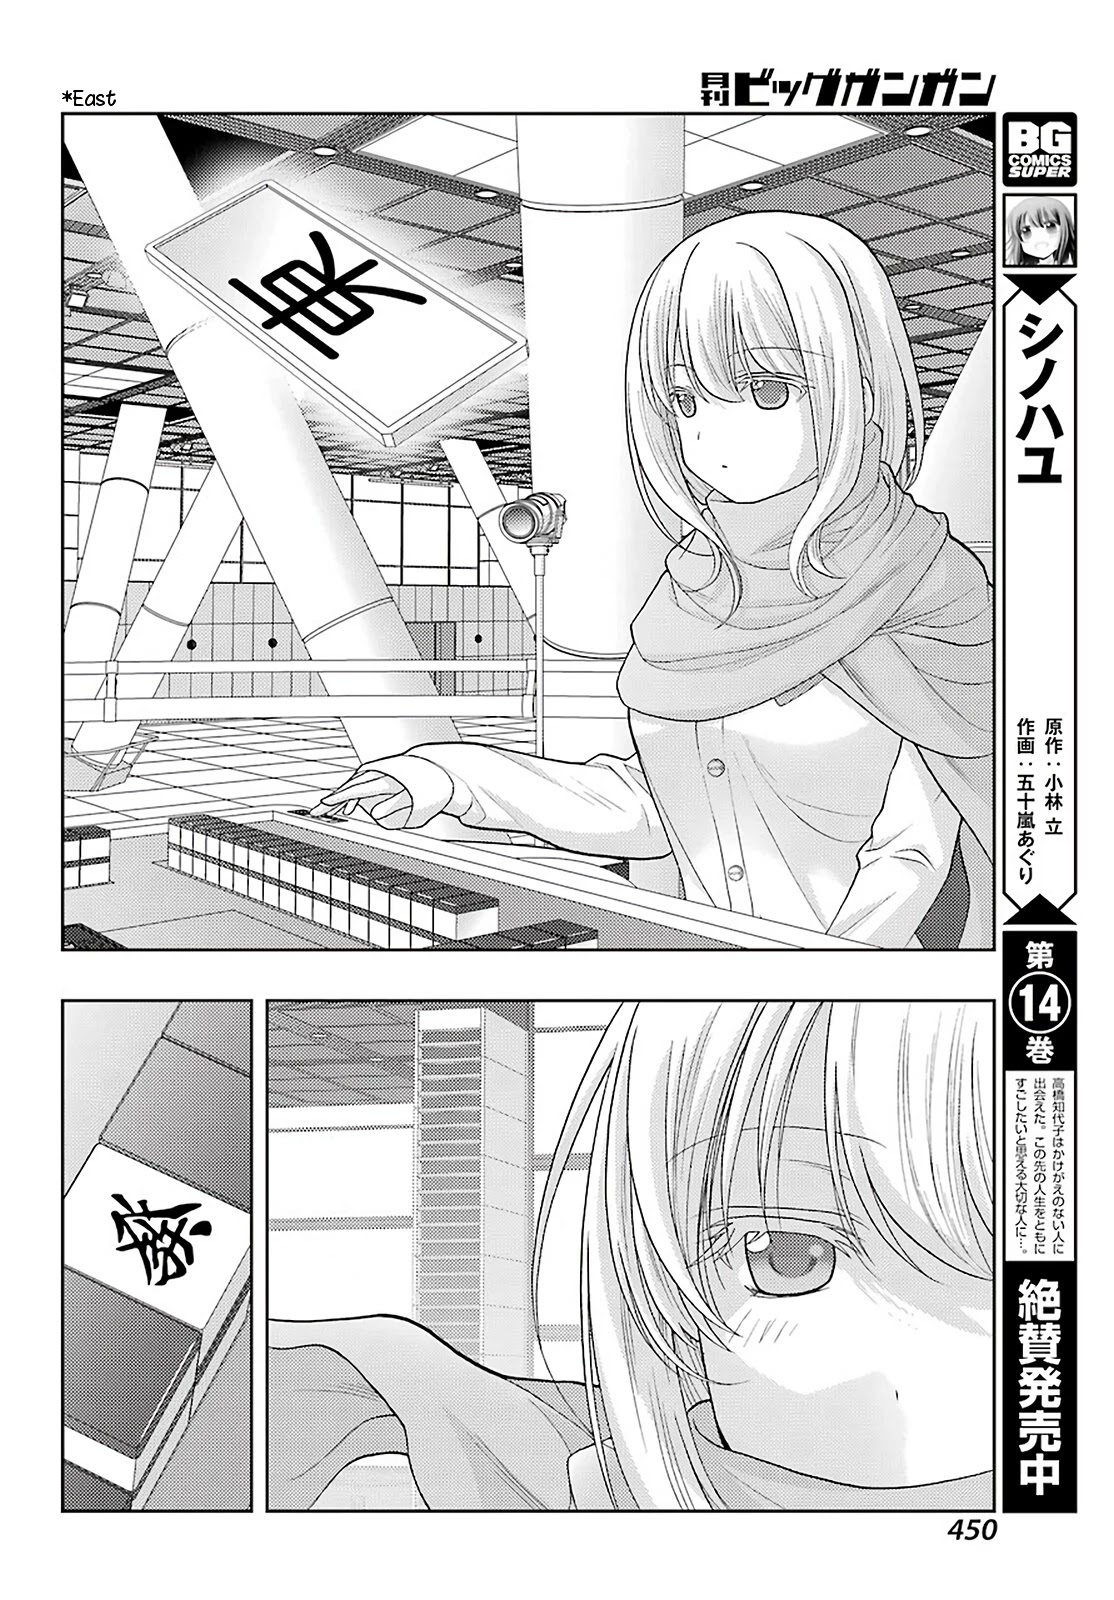 Saki: Achiga-Hen - Episode Of Side-A - New Series - Page 4